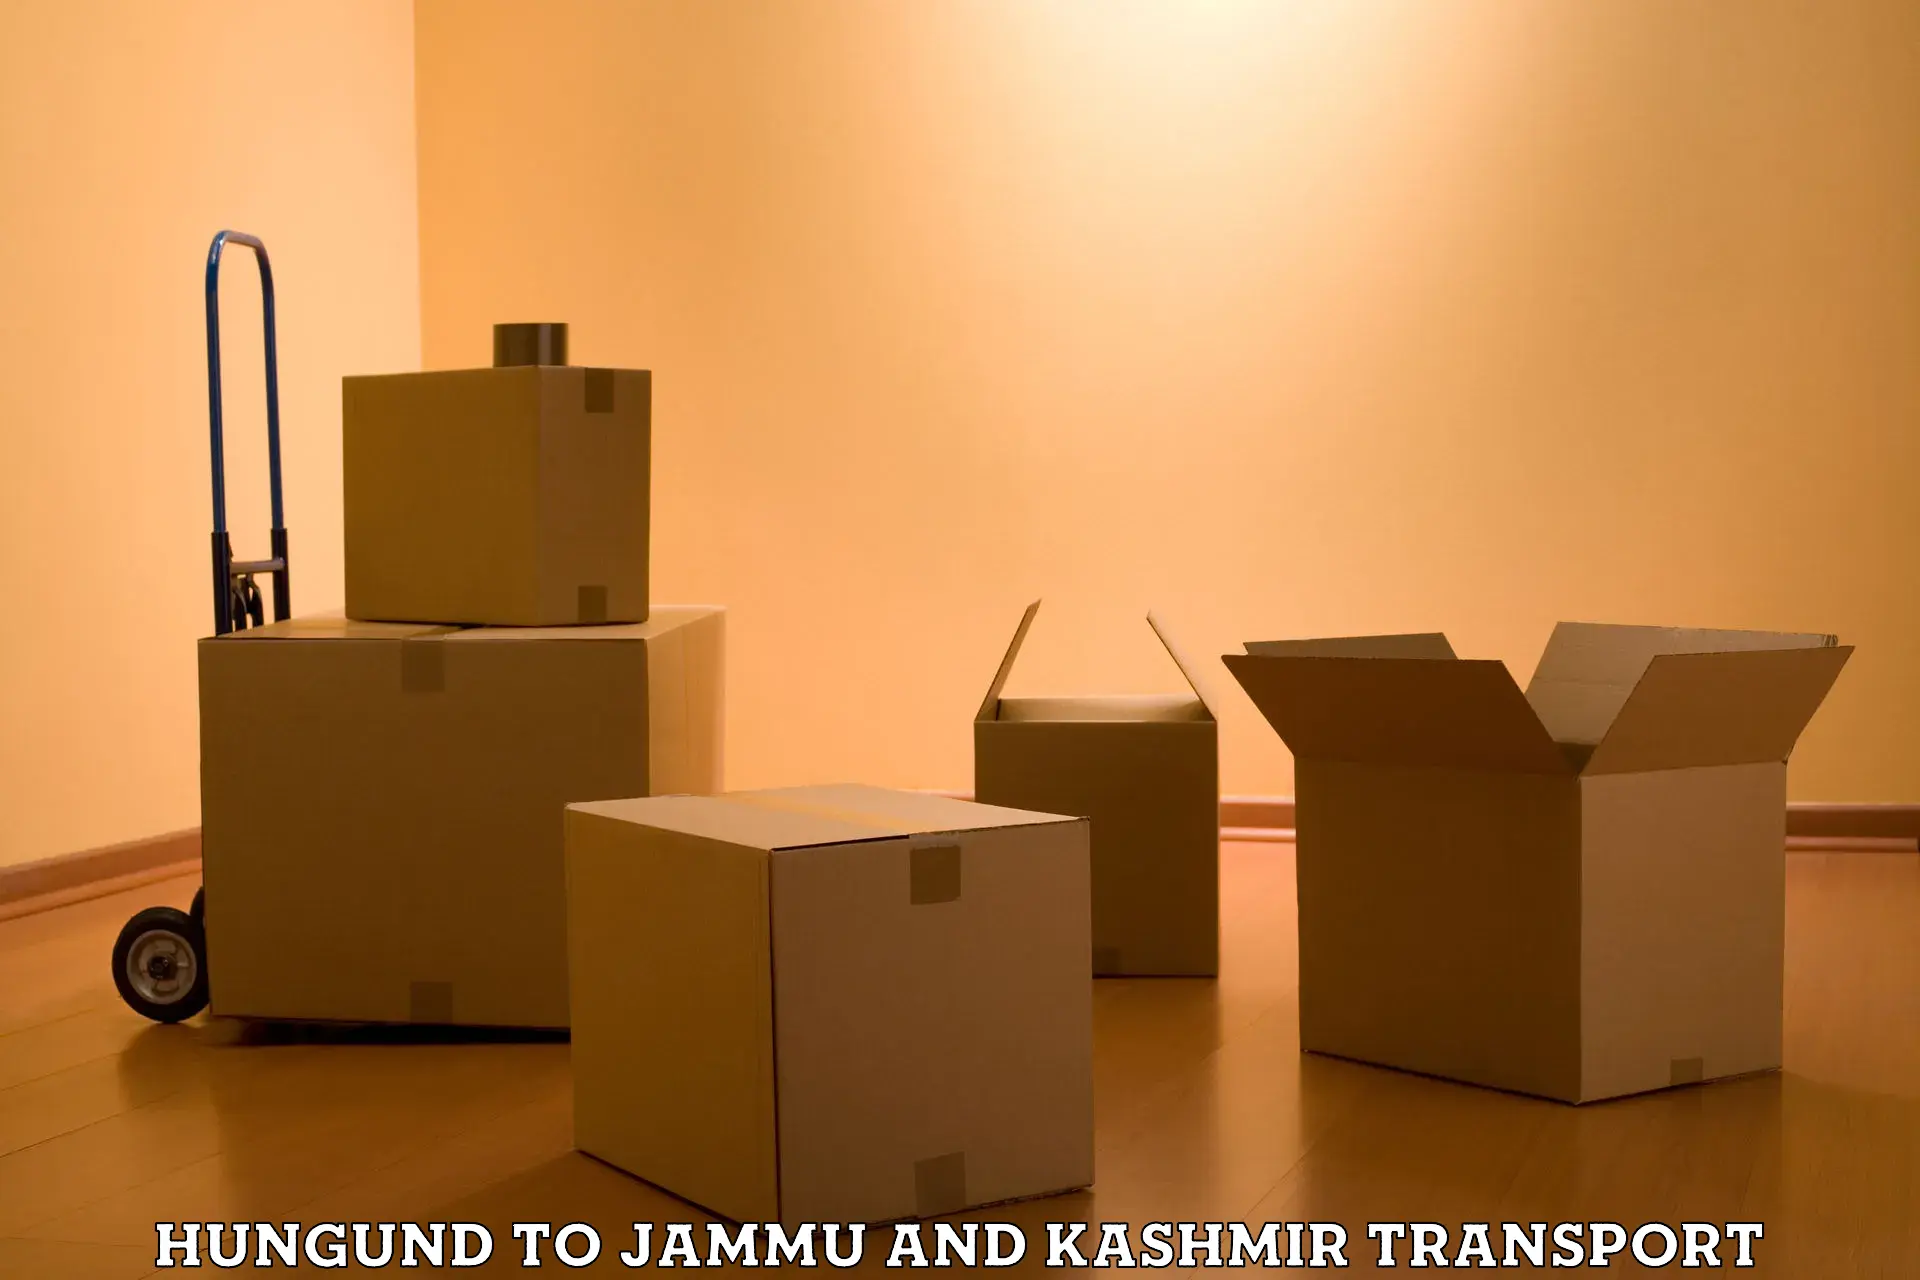 Furniture transport service Hungund to Srinagar Kashmir